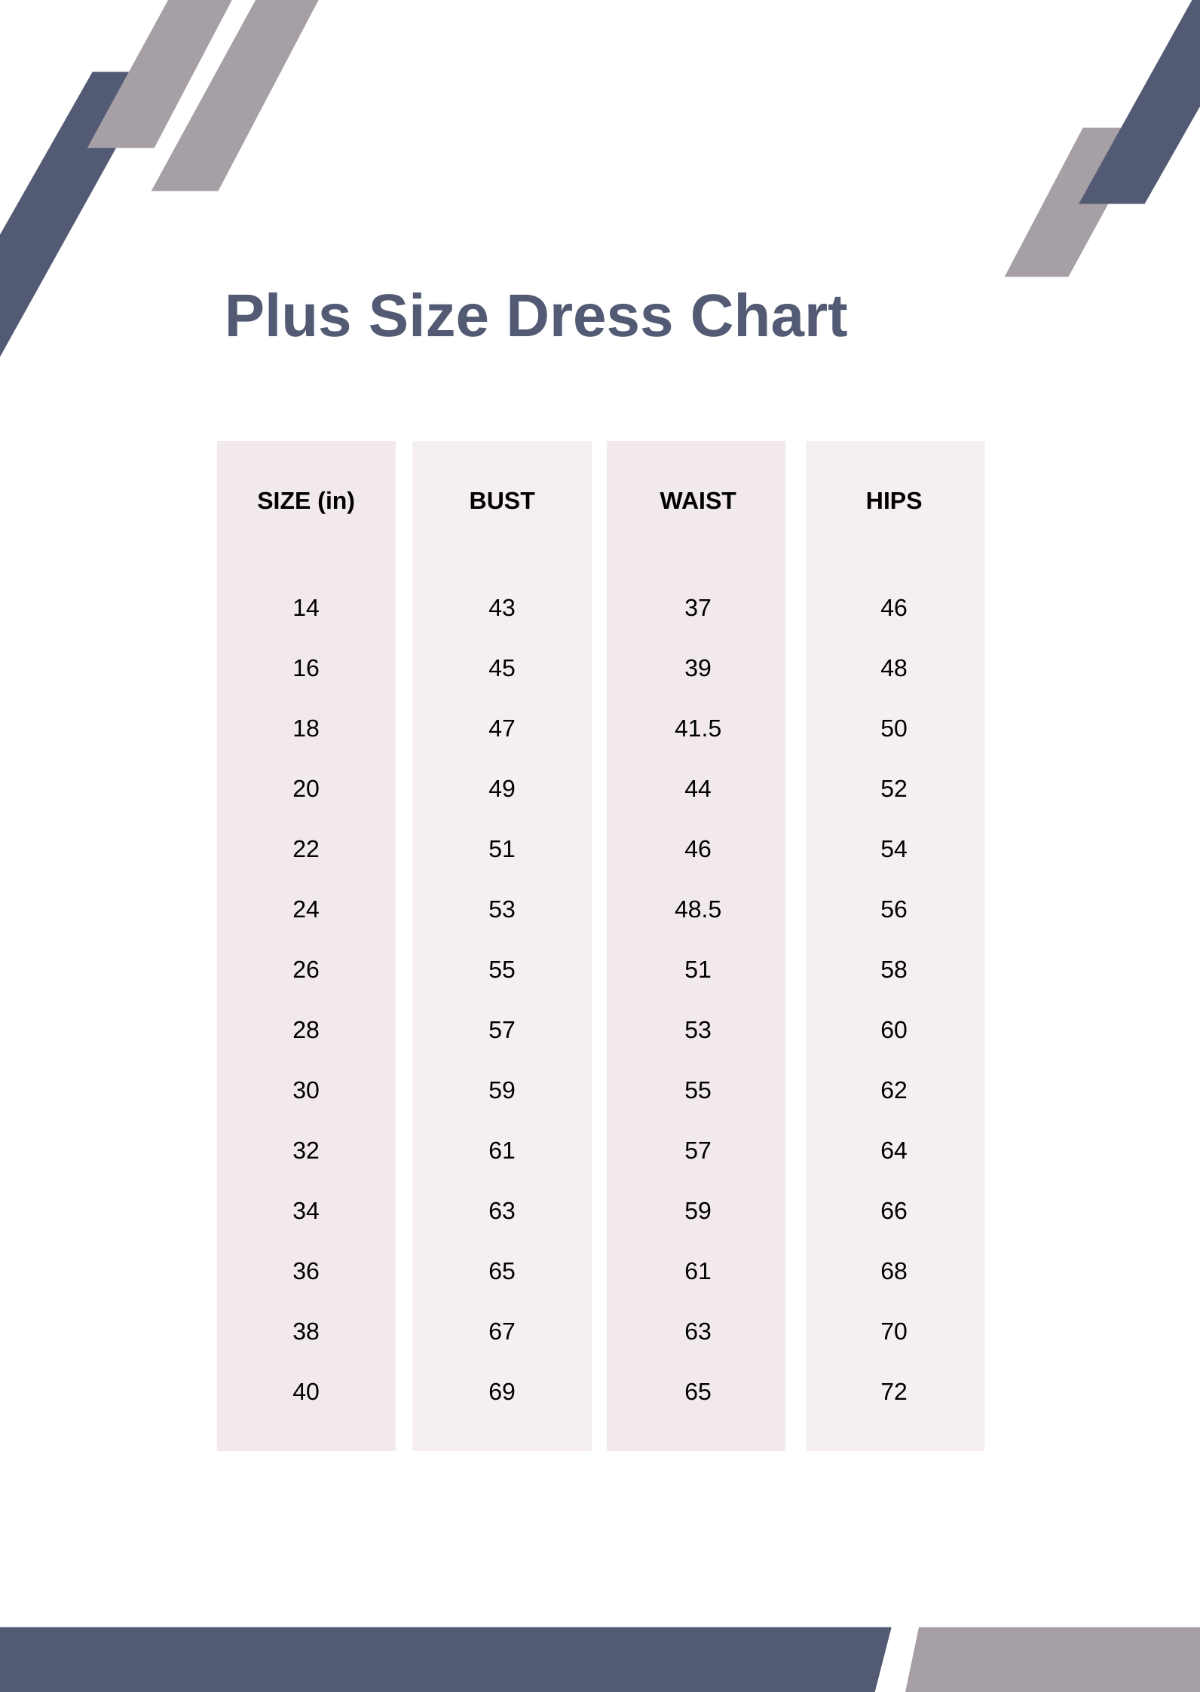 Plus Size Dress Size Chart